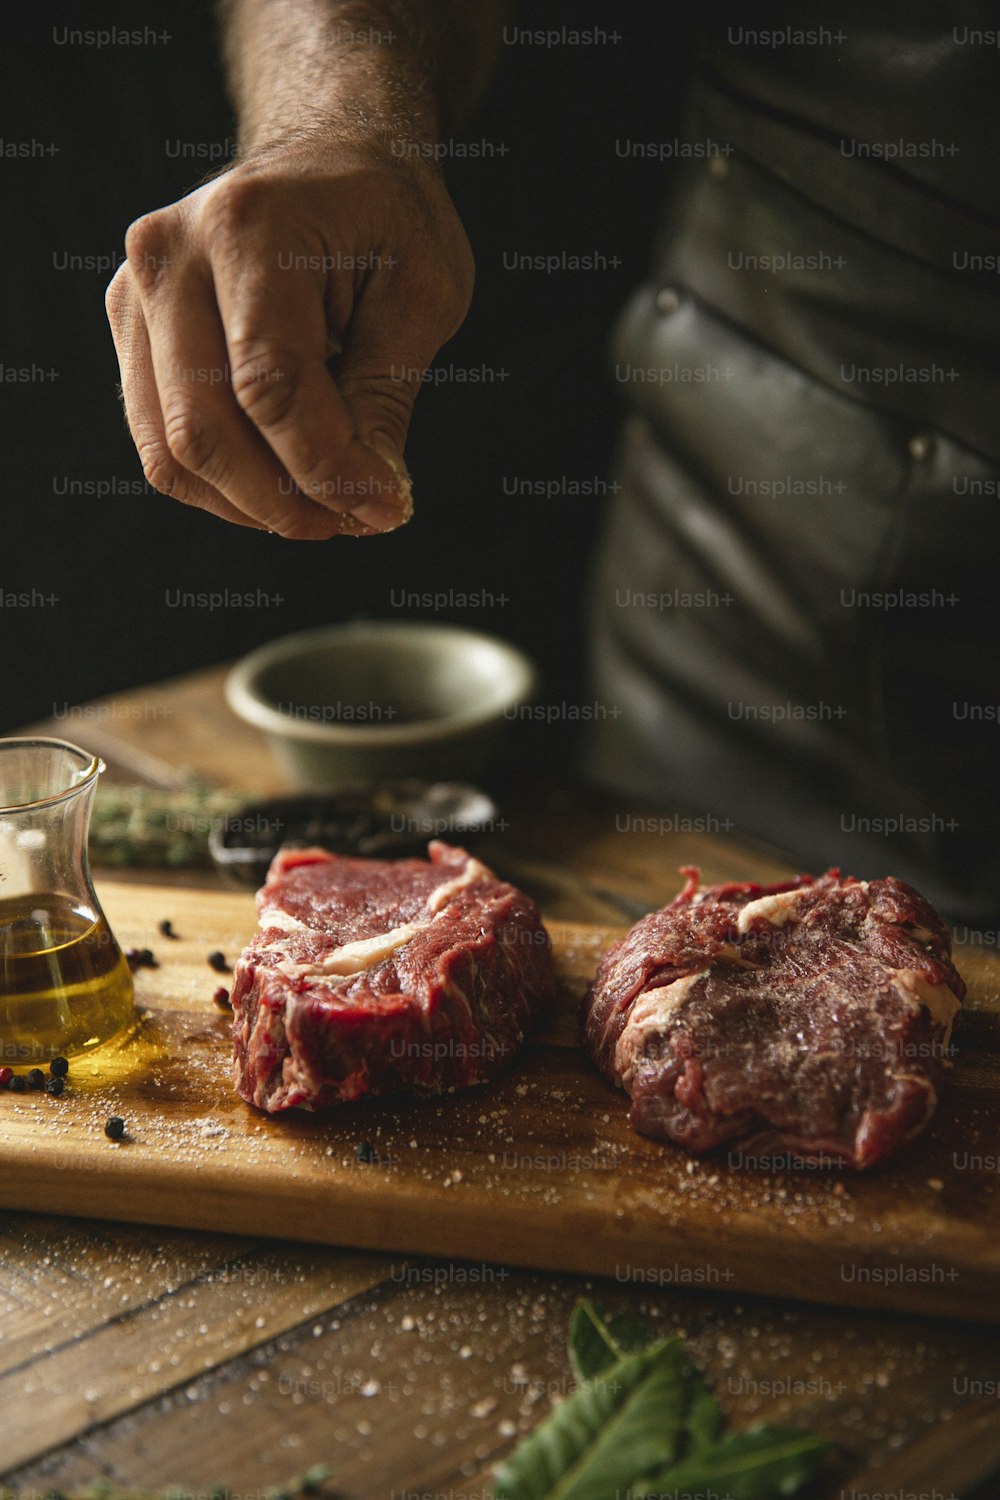 a person preparing food on a cutting board